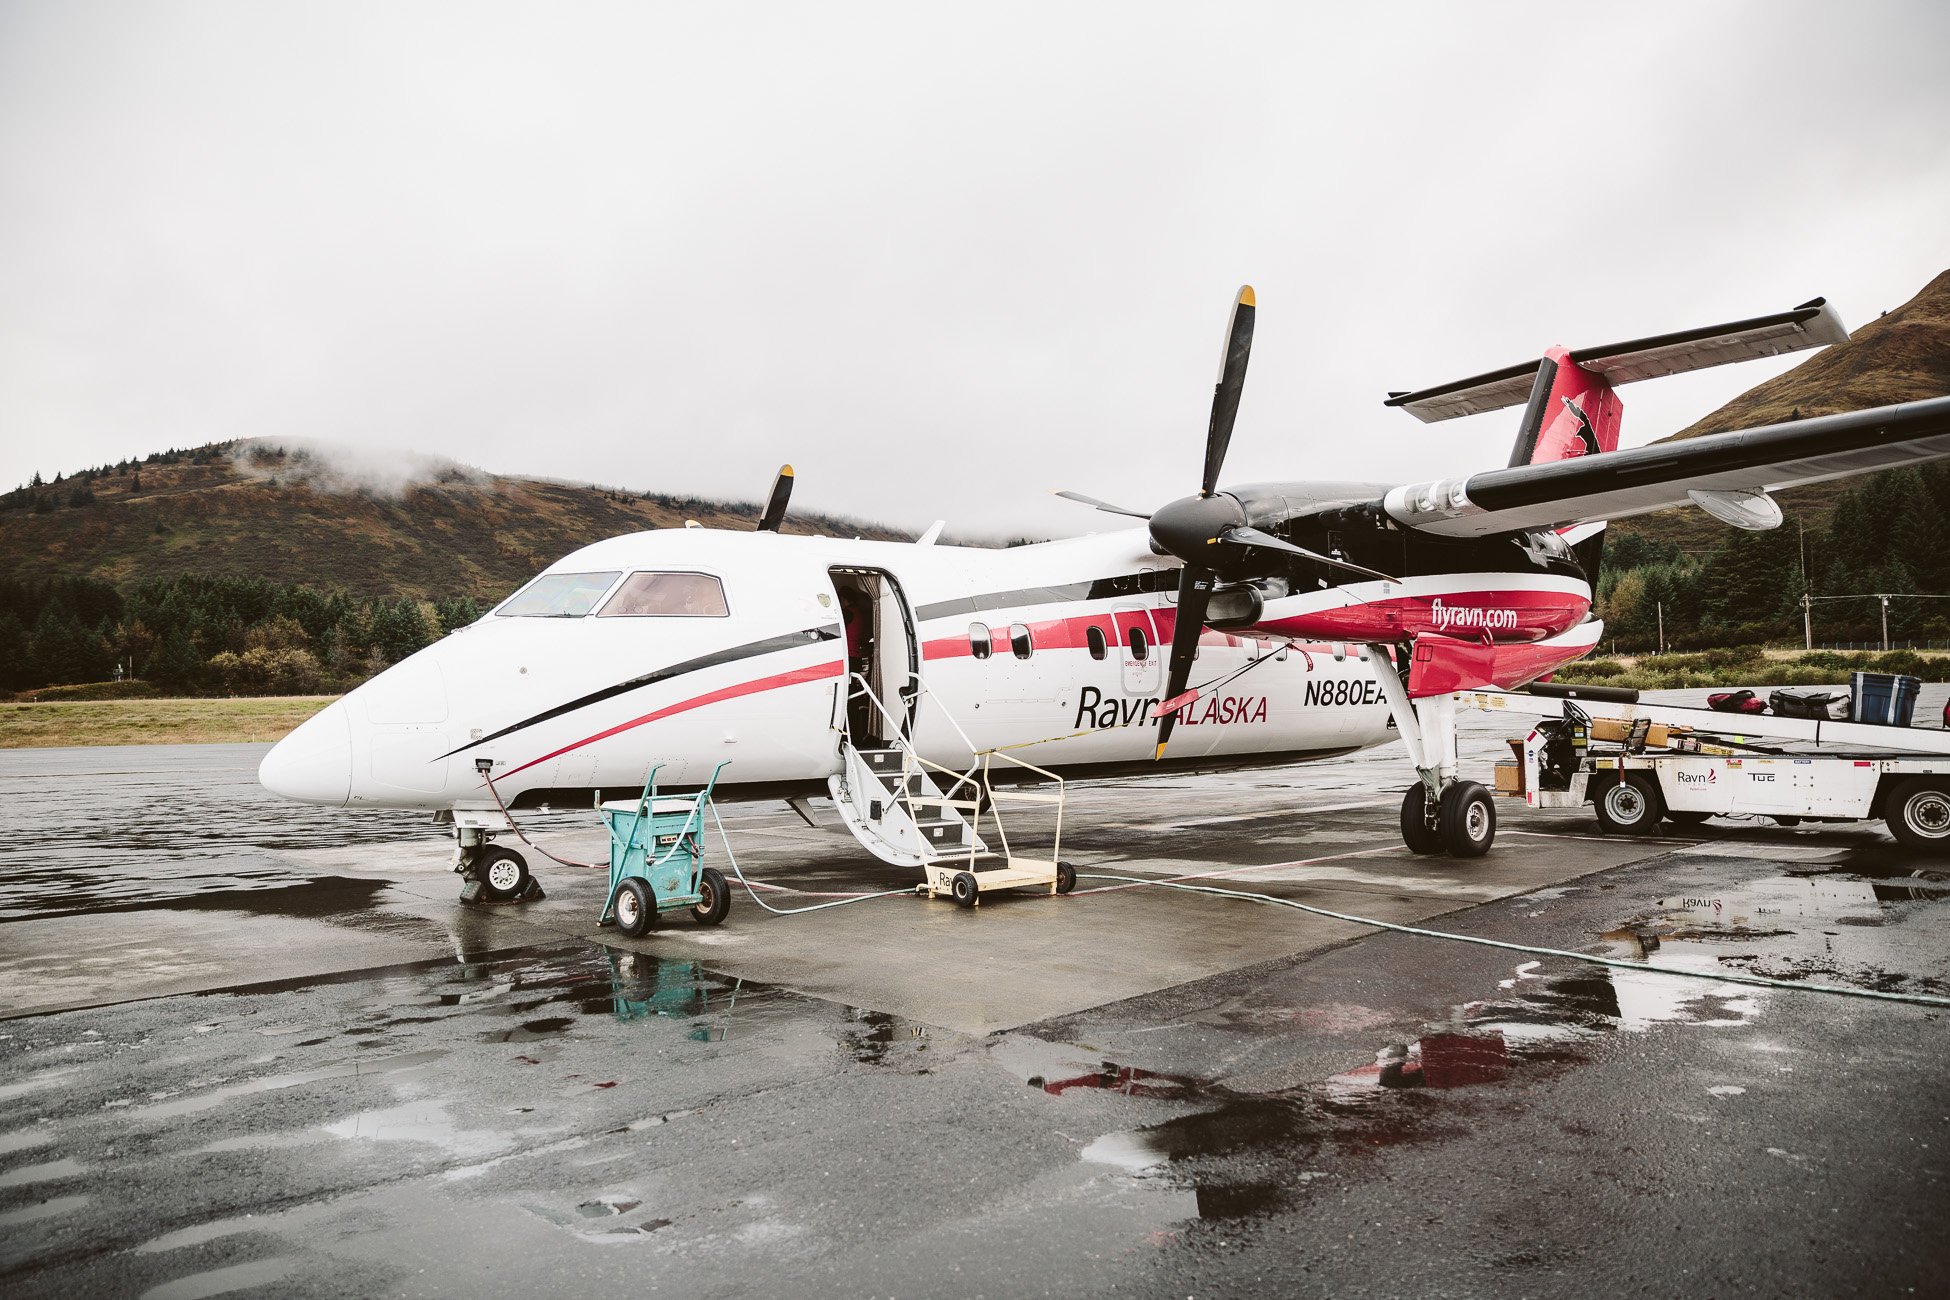 Ravn Airlines aircraft at Kodiak Island Alaska airport